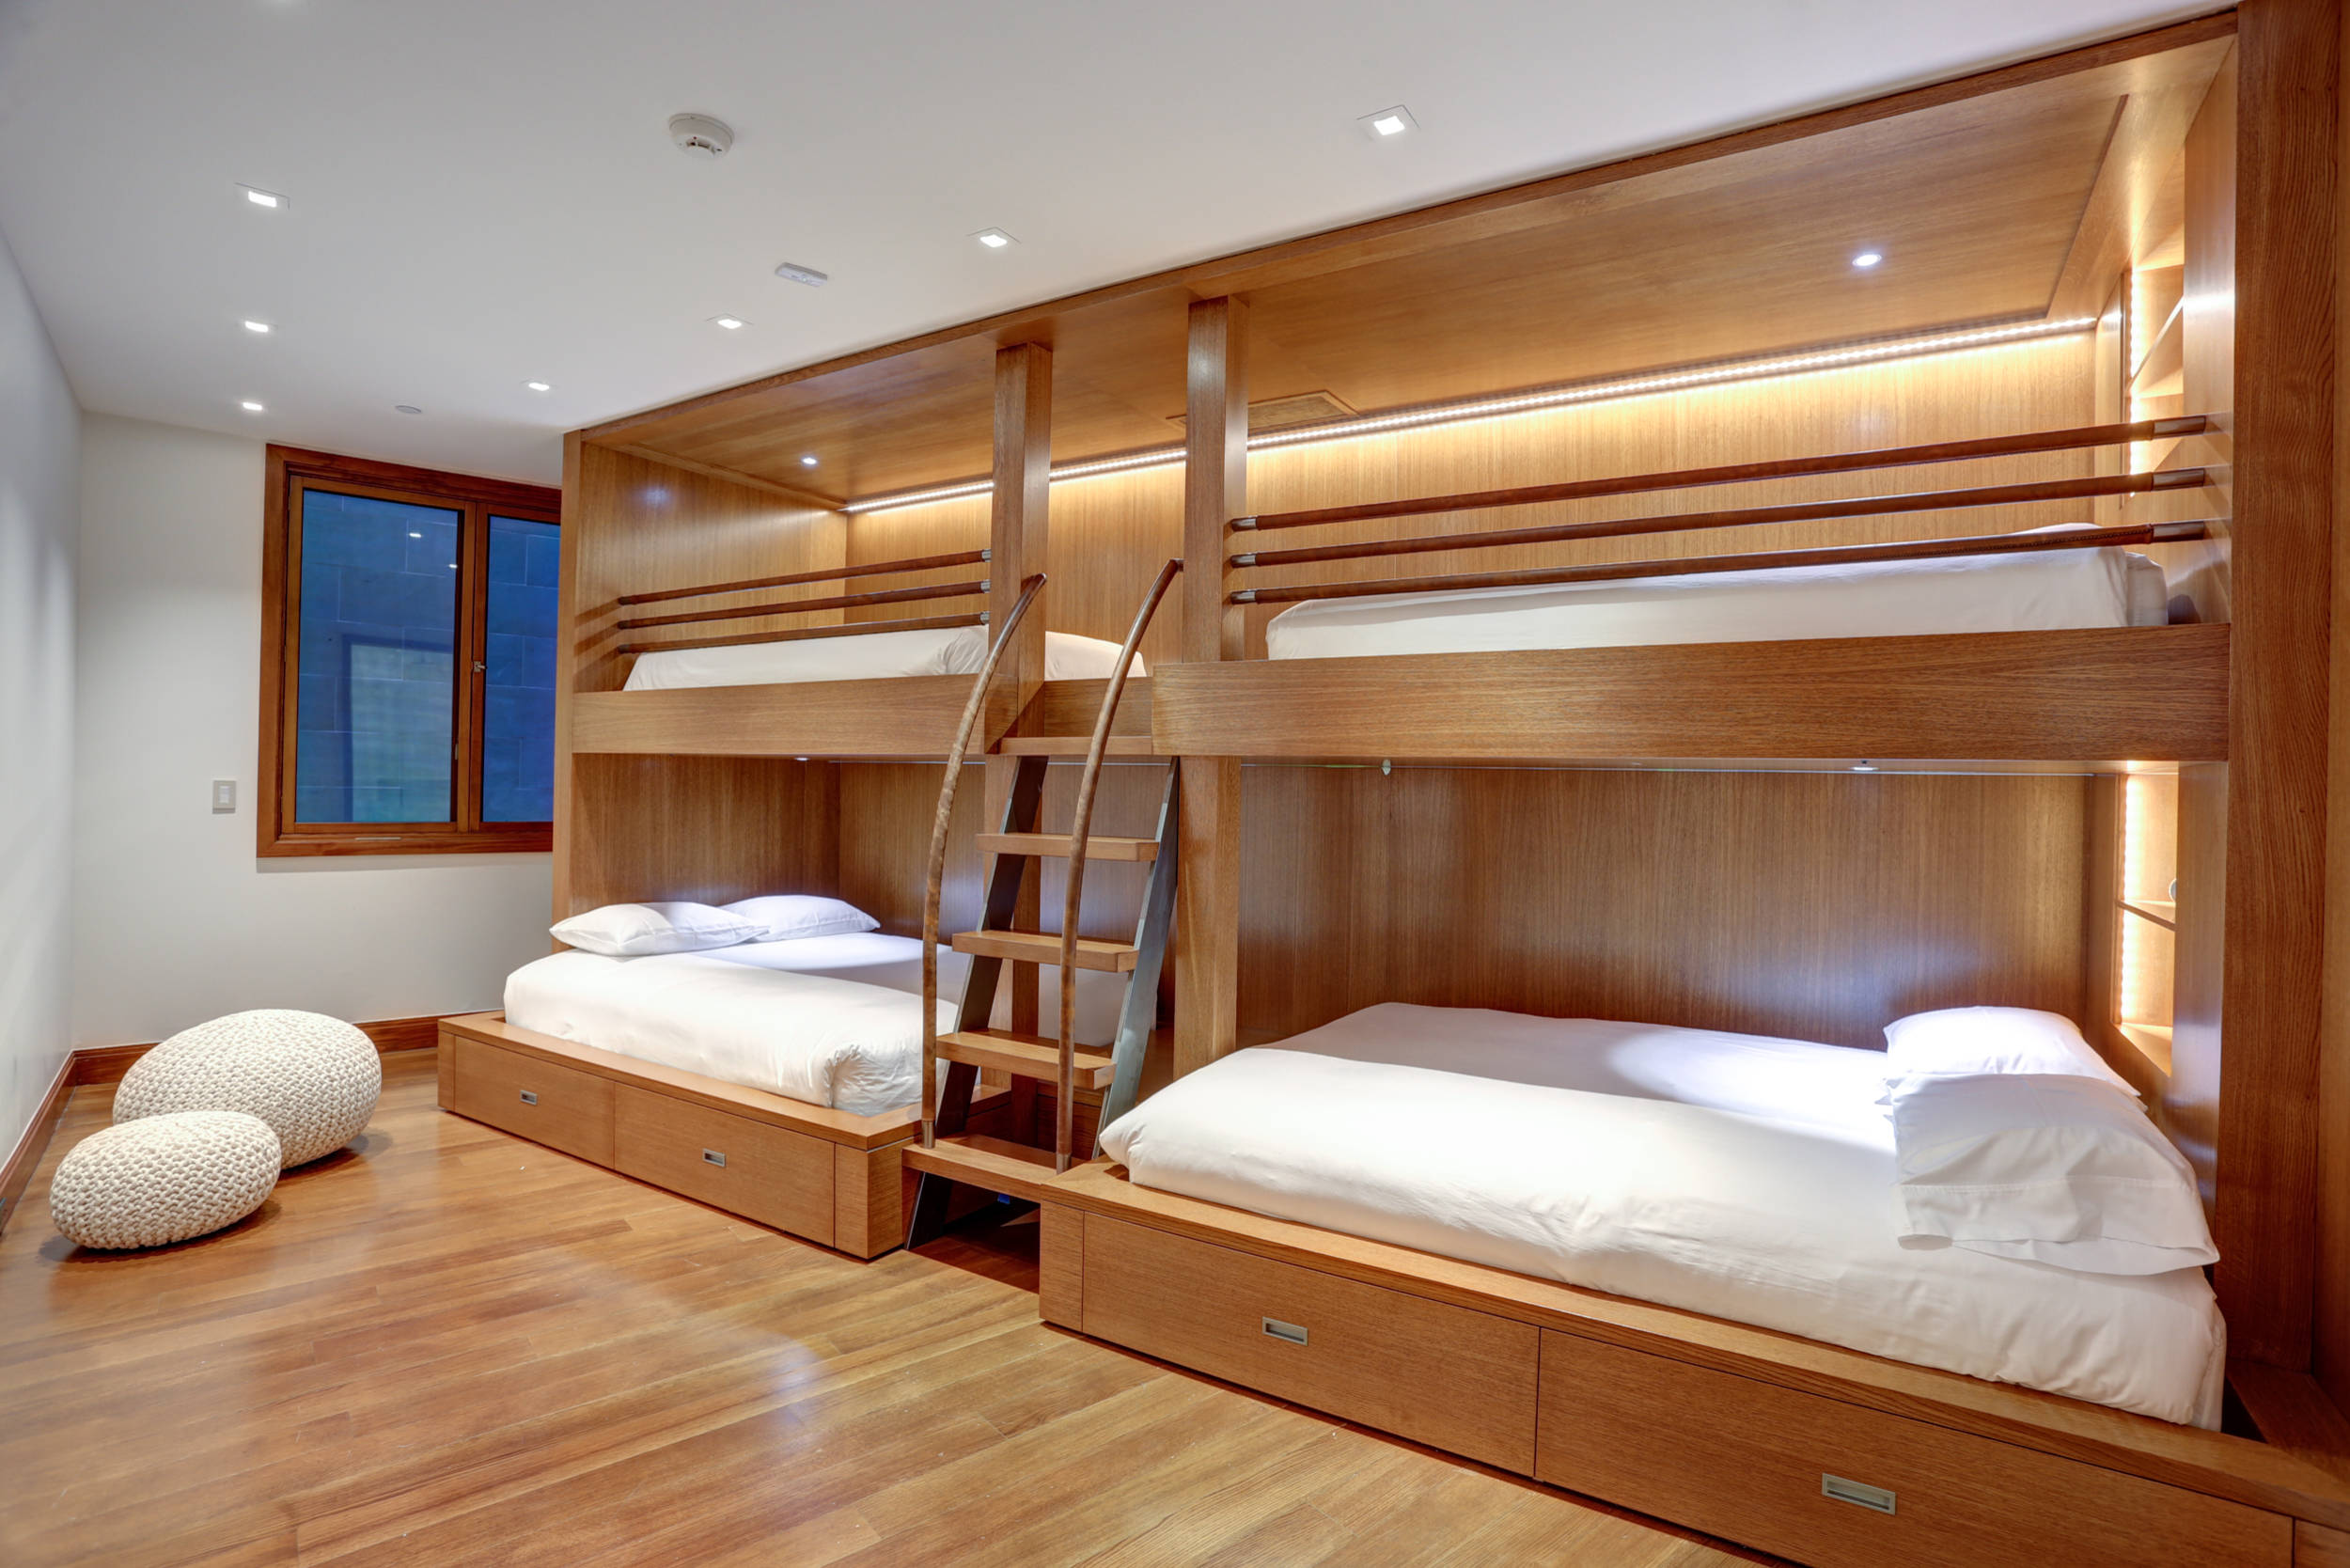 Bunk Beds Home Design Ideas Designs, Queen Loft Bed Perth Wall